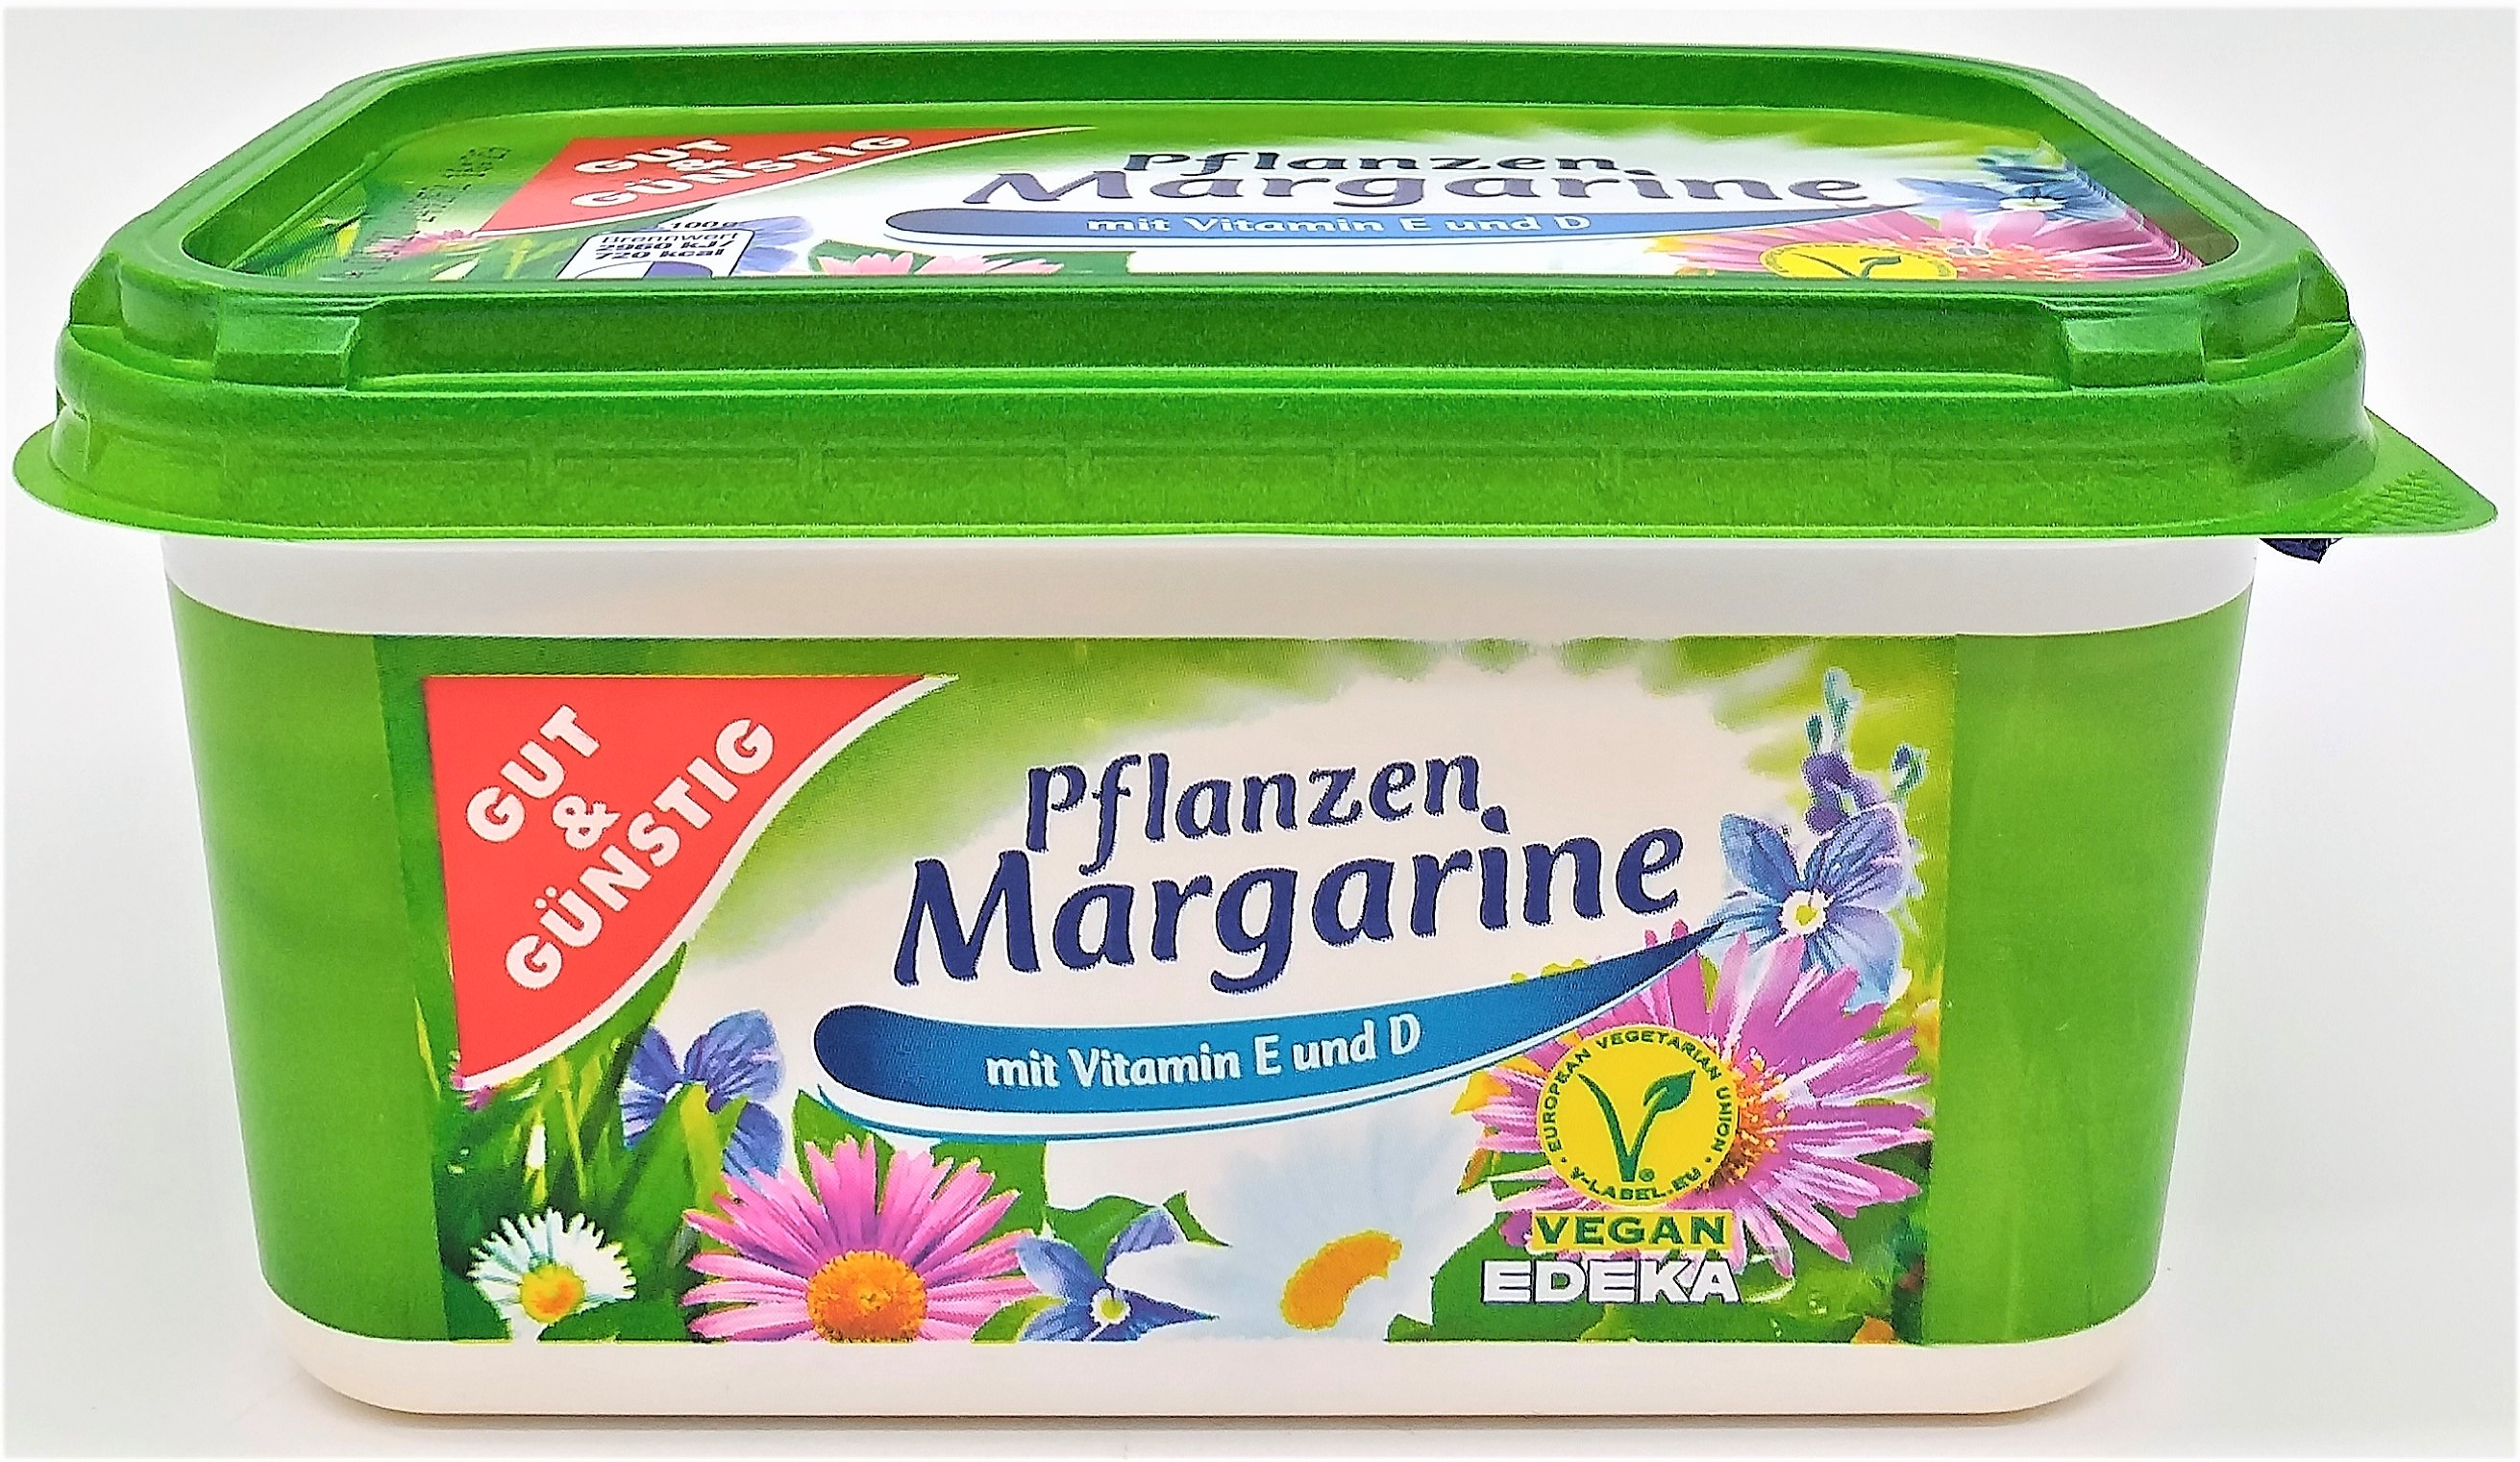 G&G Pflanzenmargarine 80% Fett 500g